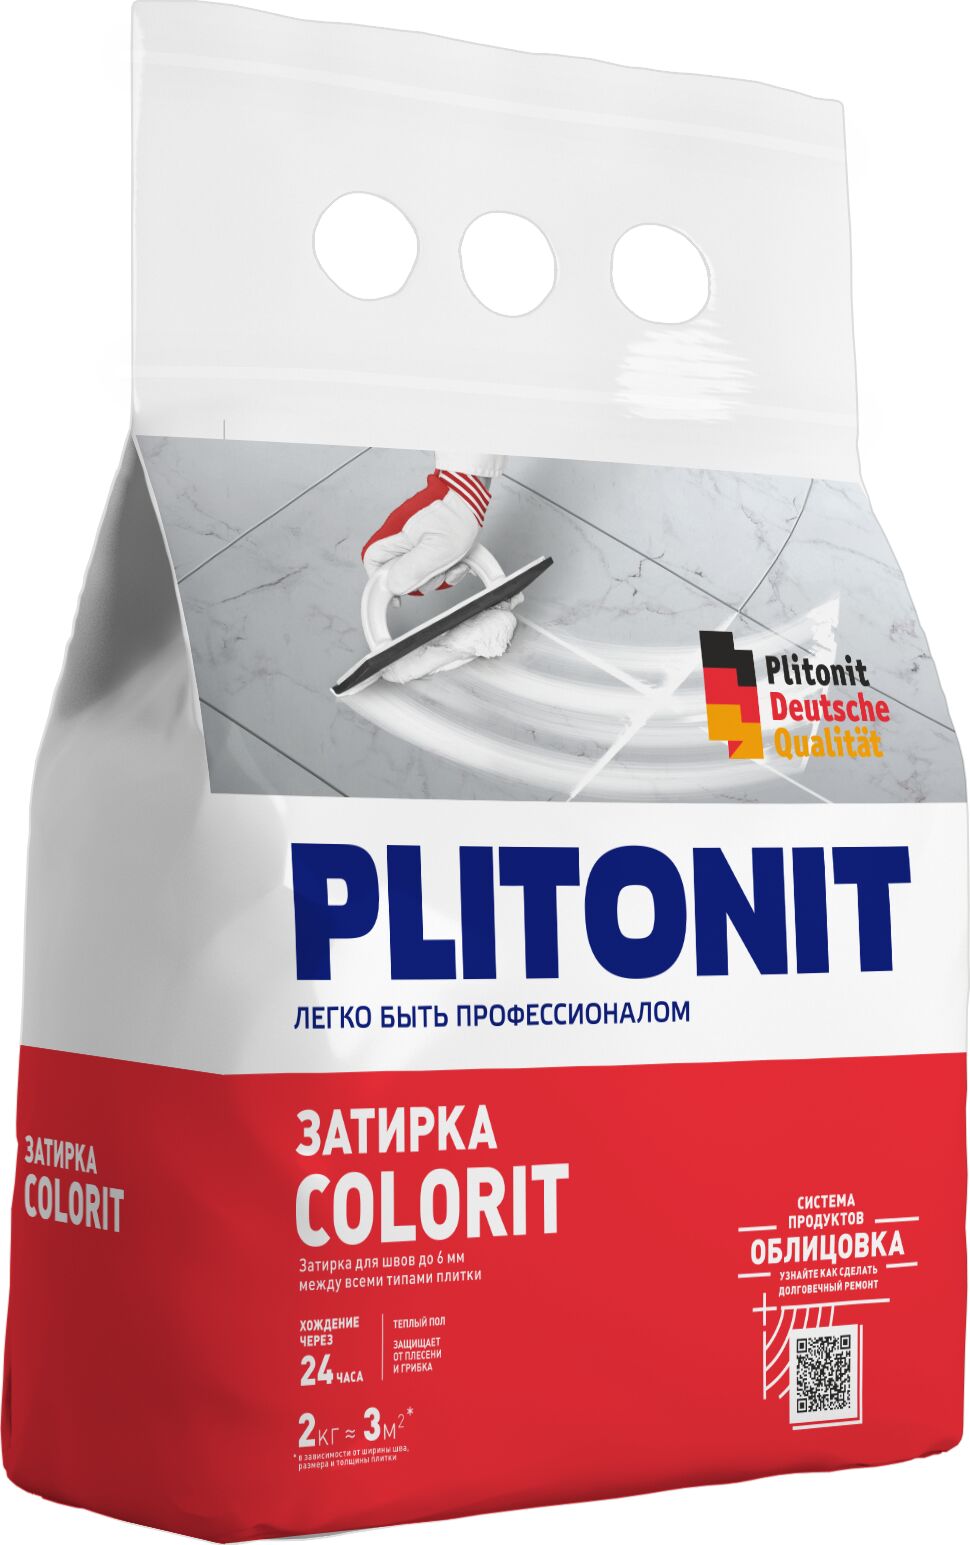 PLITONIT Colorit затирка между всеми типами плитки (1,5-6 мм) СВЕТЛО-БЕЖЕВАЯ -2, PLITONIT Colorit затирка между всеми типами плитки (1,5-6 мм) светло-бежевая -2